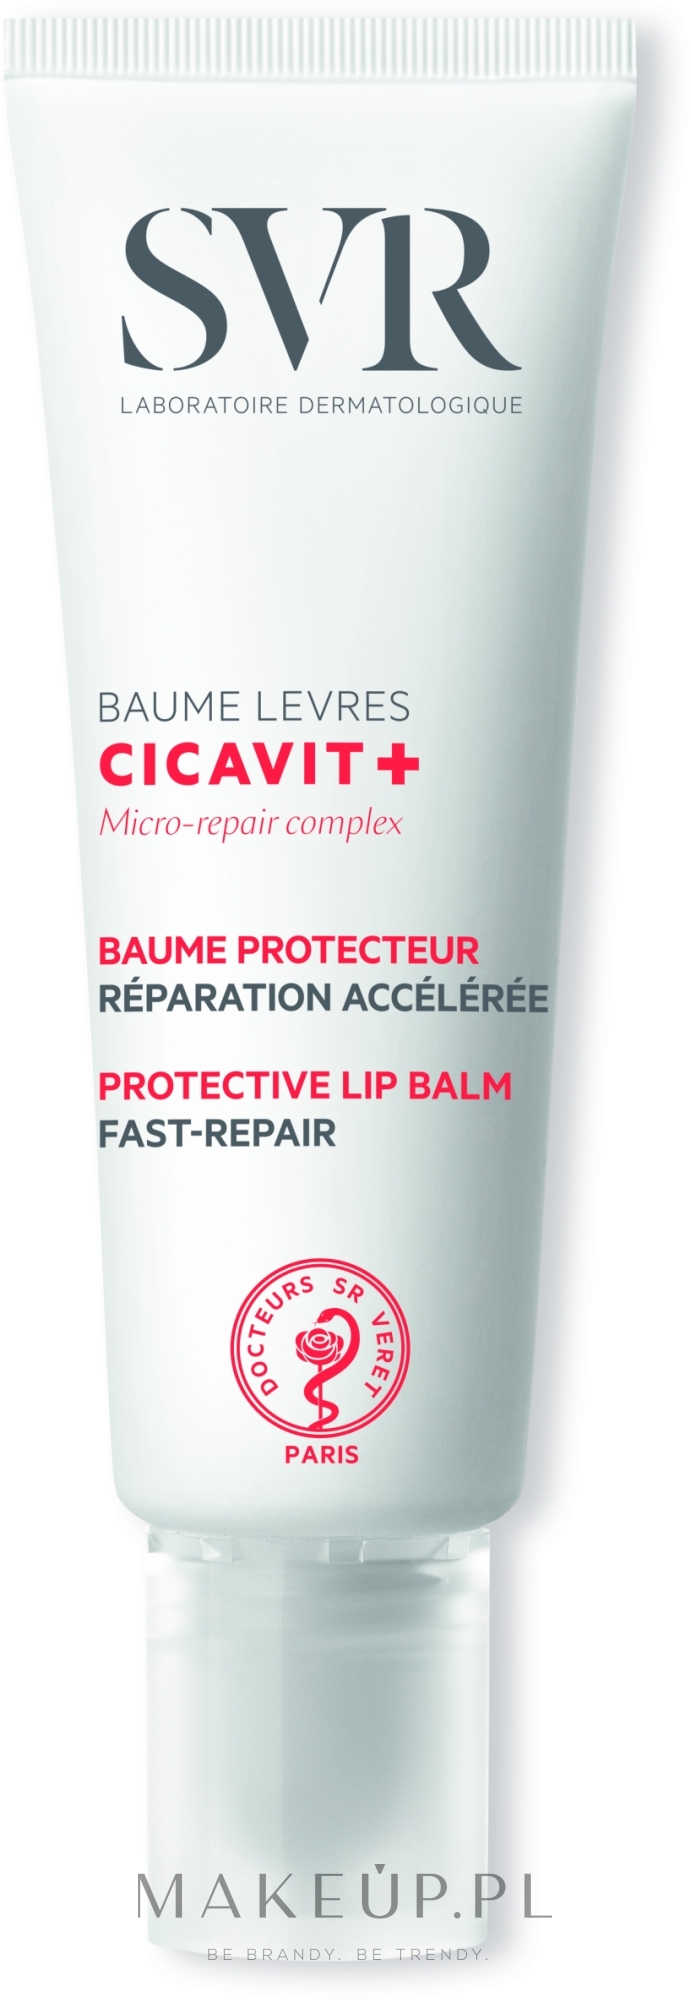 Ochronny balsam do ust - SVR Cicavit+ Protective Lip Balm Fast-Repair — Zdjęcie 10 g